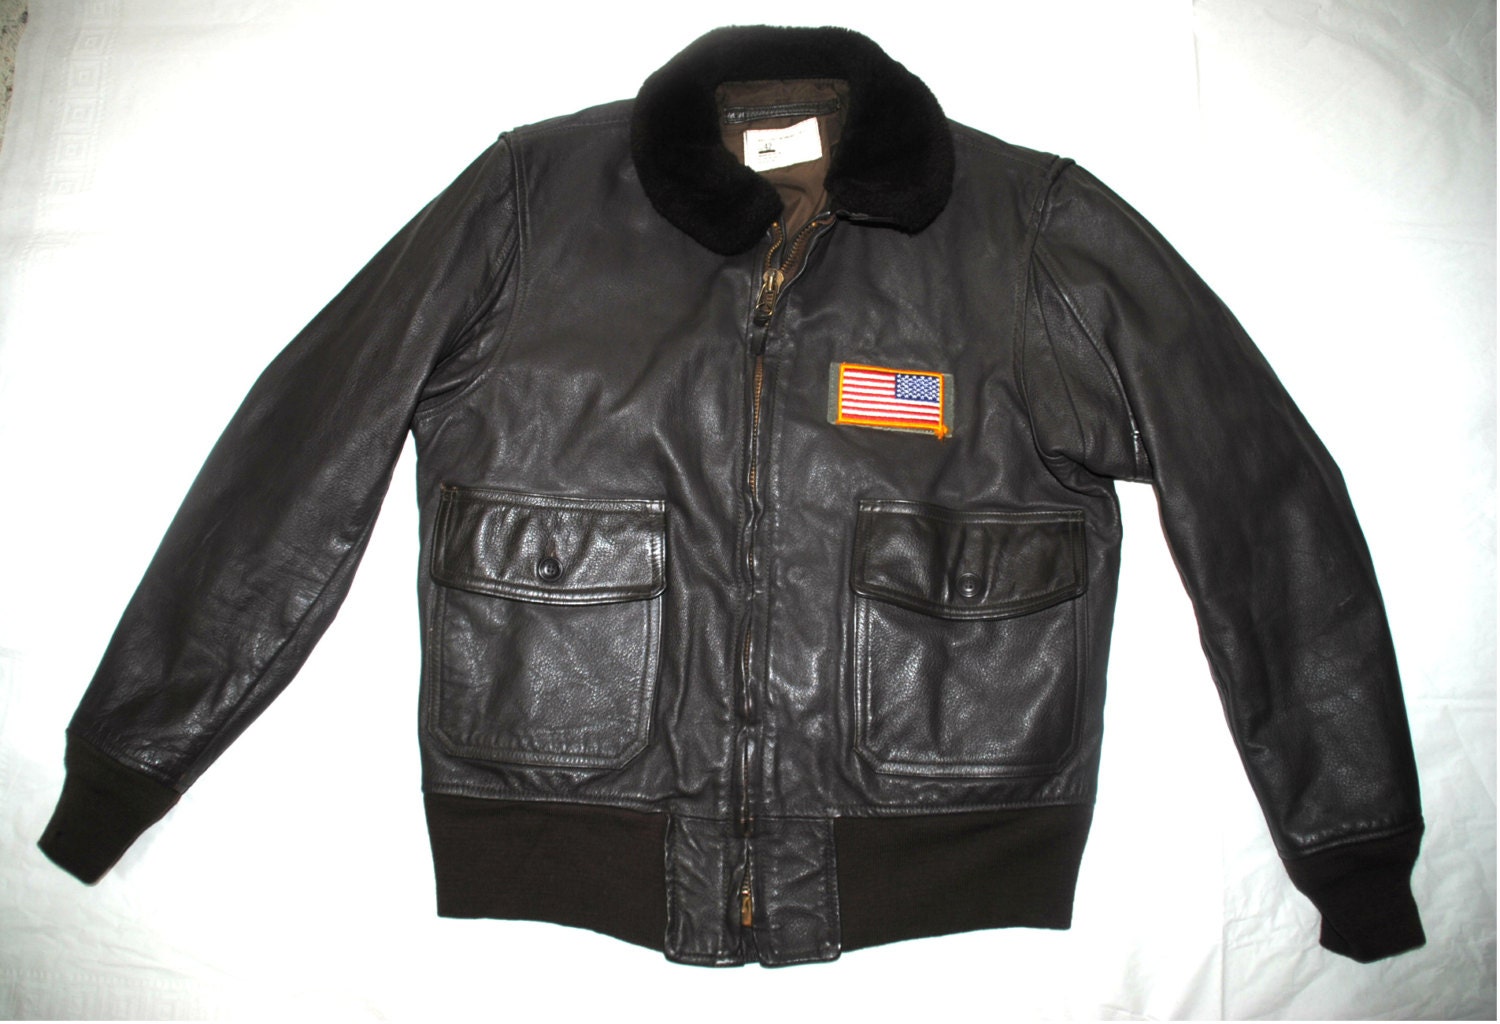 Vintage 1986 USN Navy issue brown leather G-1 flight jacket